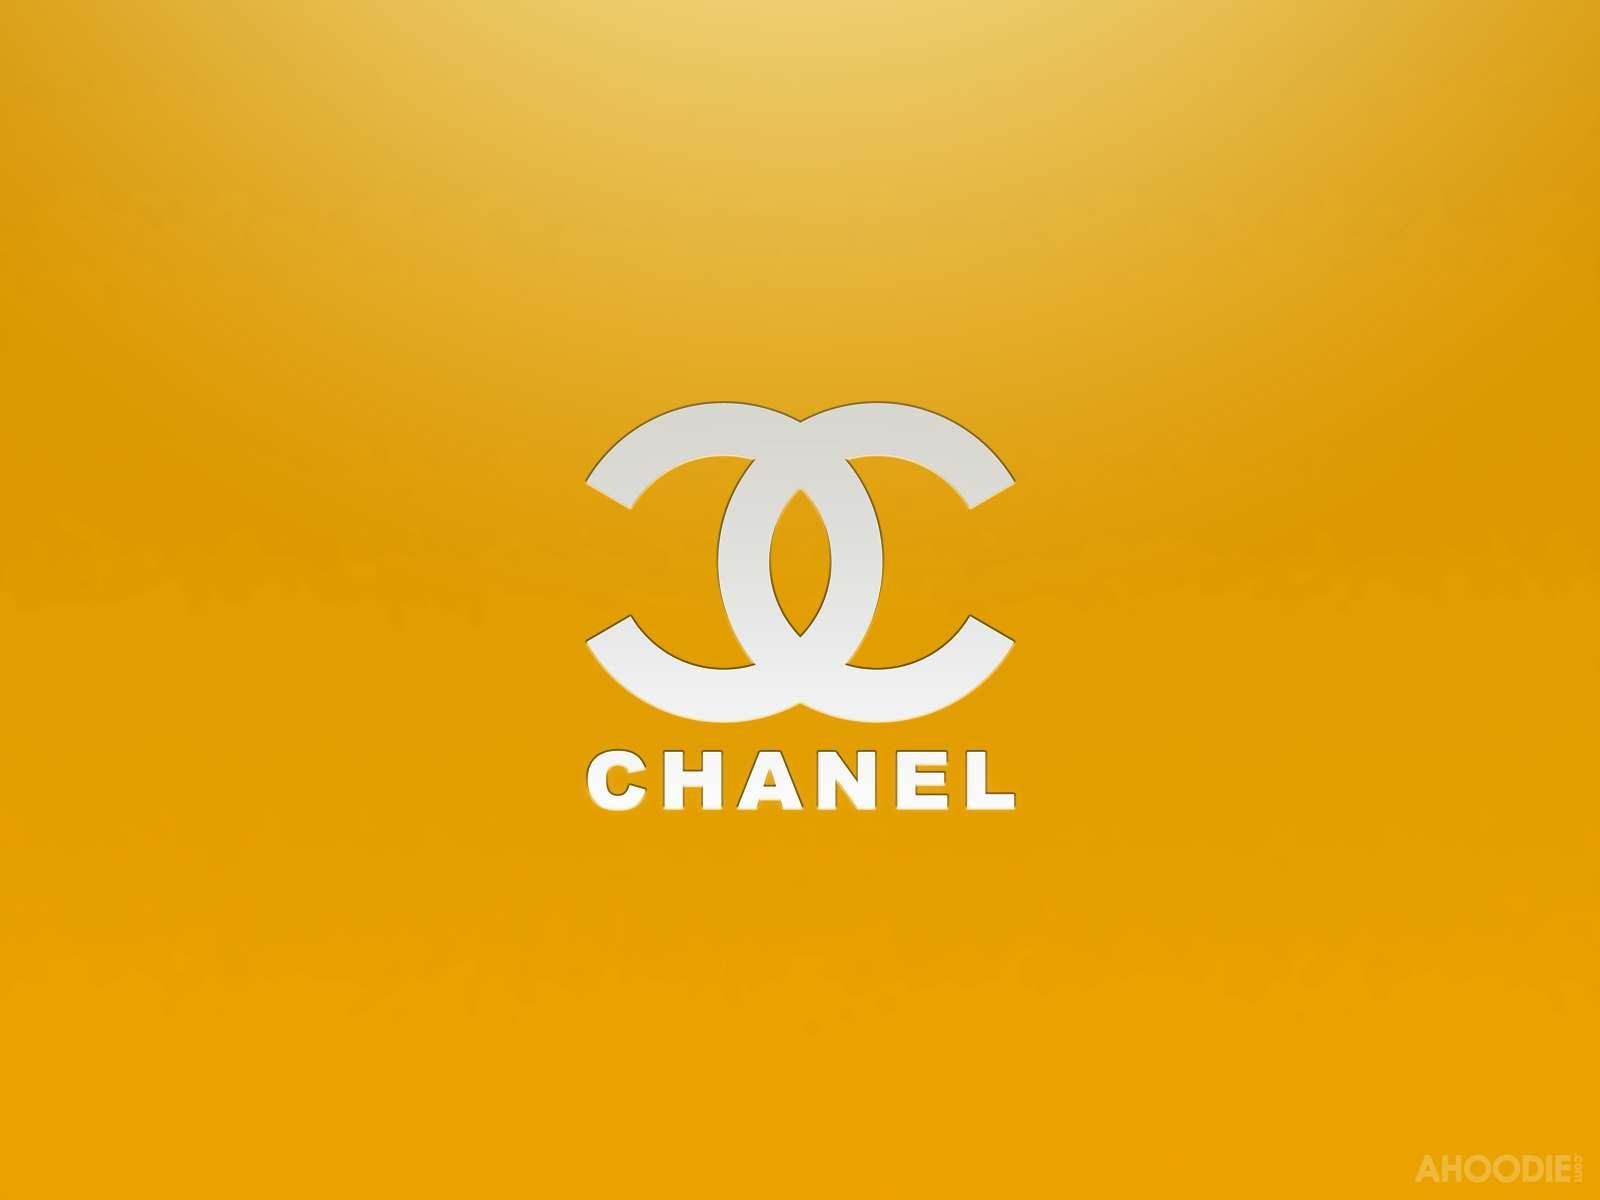 Chanel logo wallpaper for your desktop - Chanel